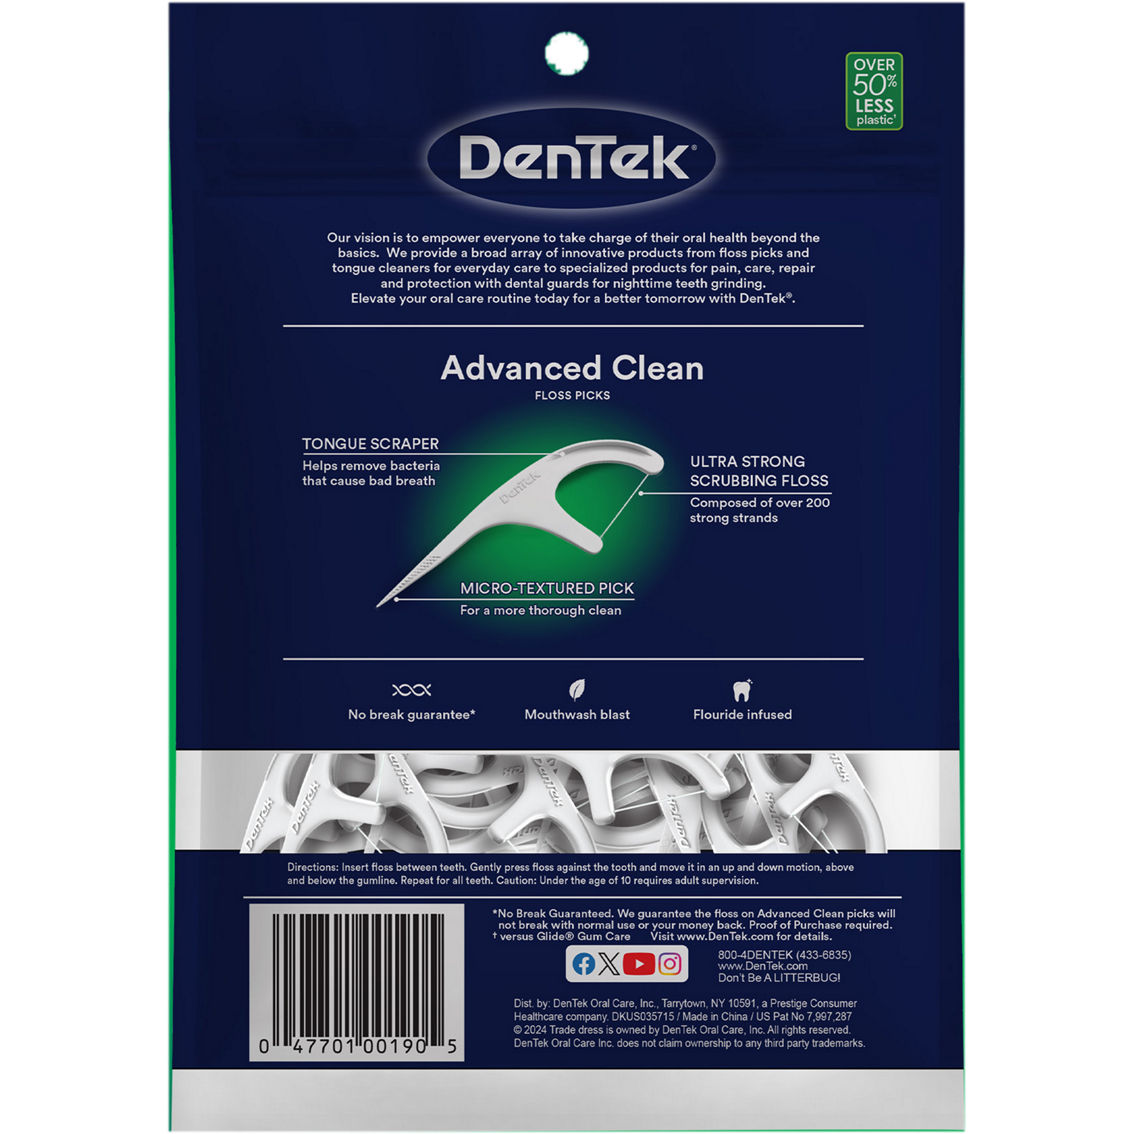 DenTek Triple Clean Floss Picks 150 ct. - Image 2 of 4